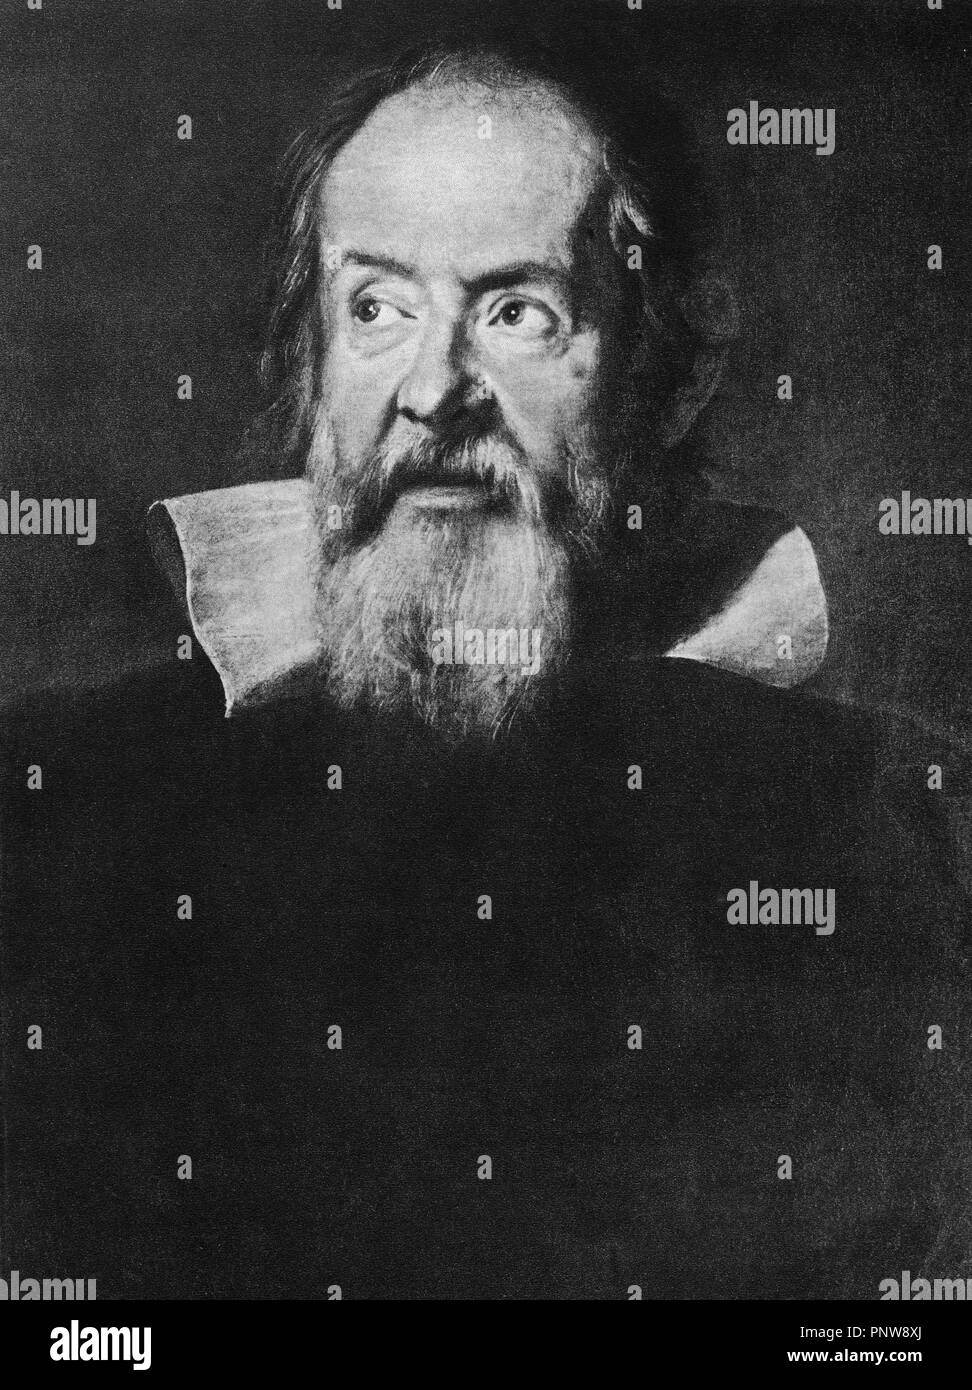 Portrait von Galileo Galilei - 1636 - Öl auf Leinwand. Autor: SUSTERMANS, Justus. Stockfoto